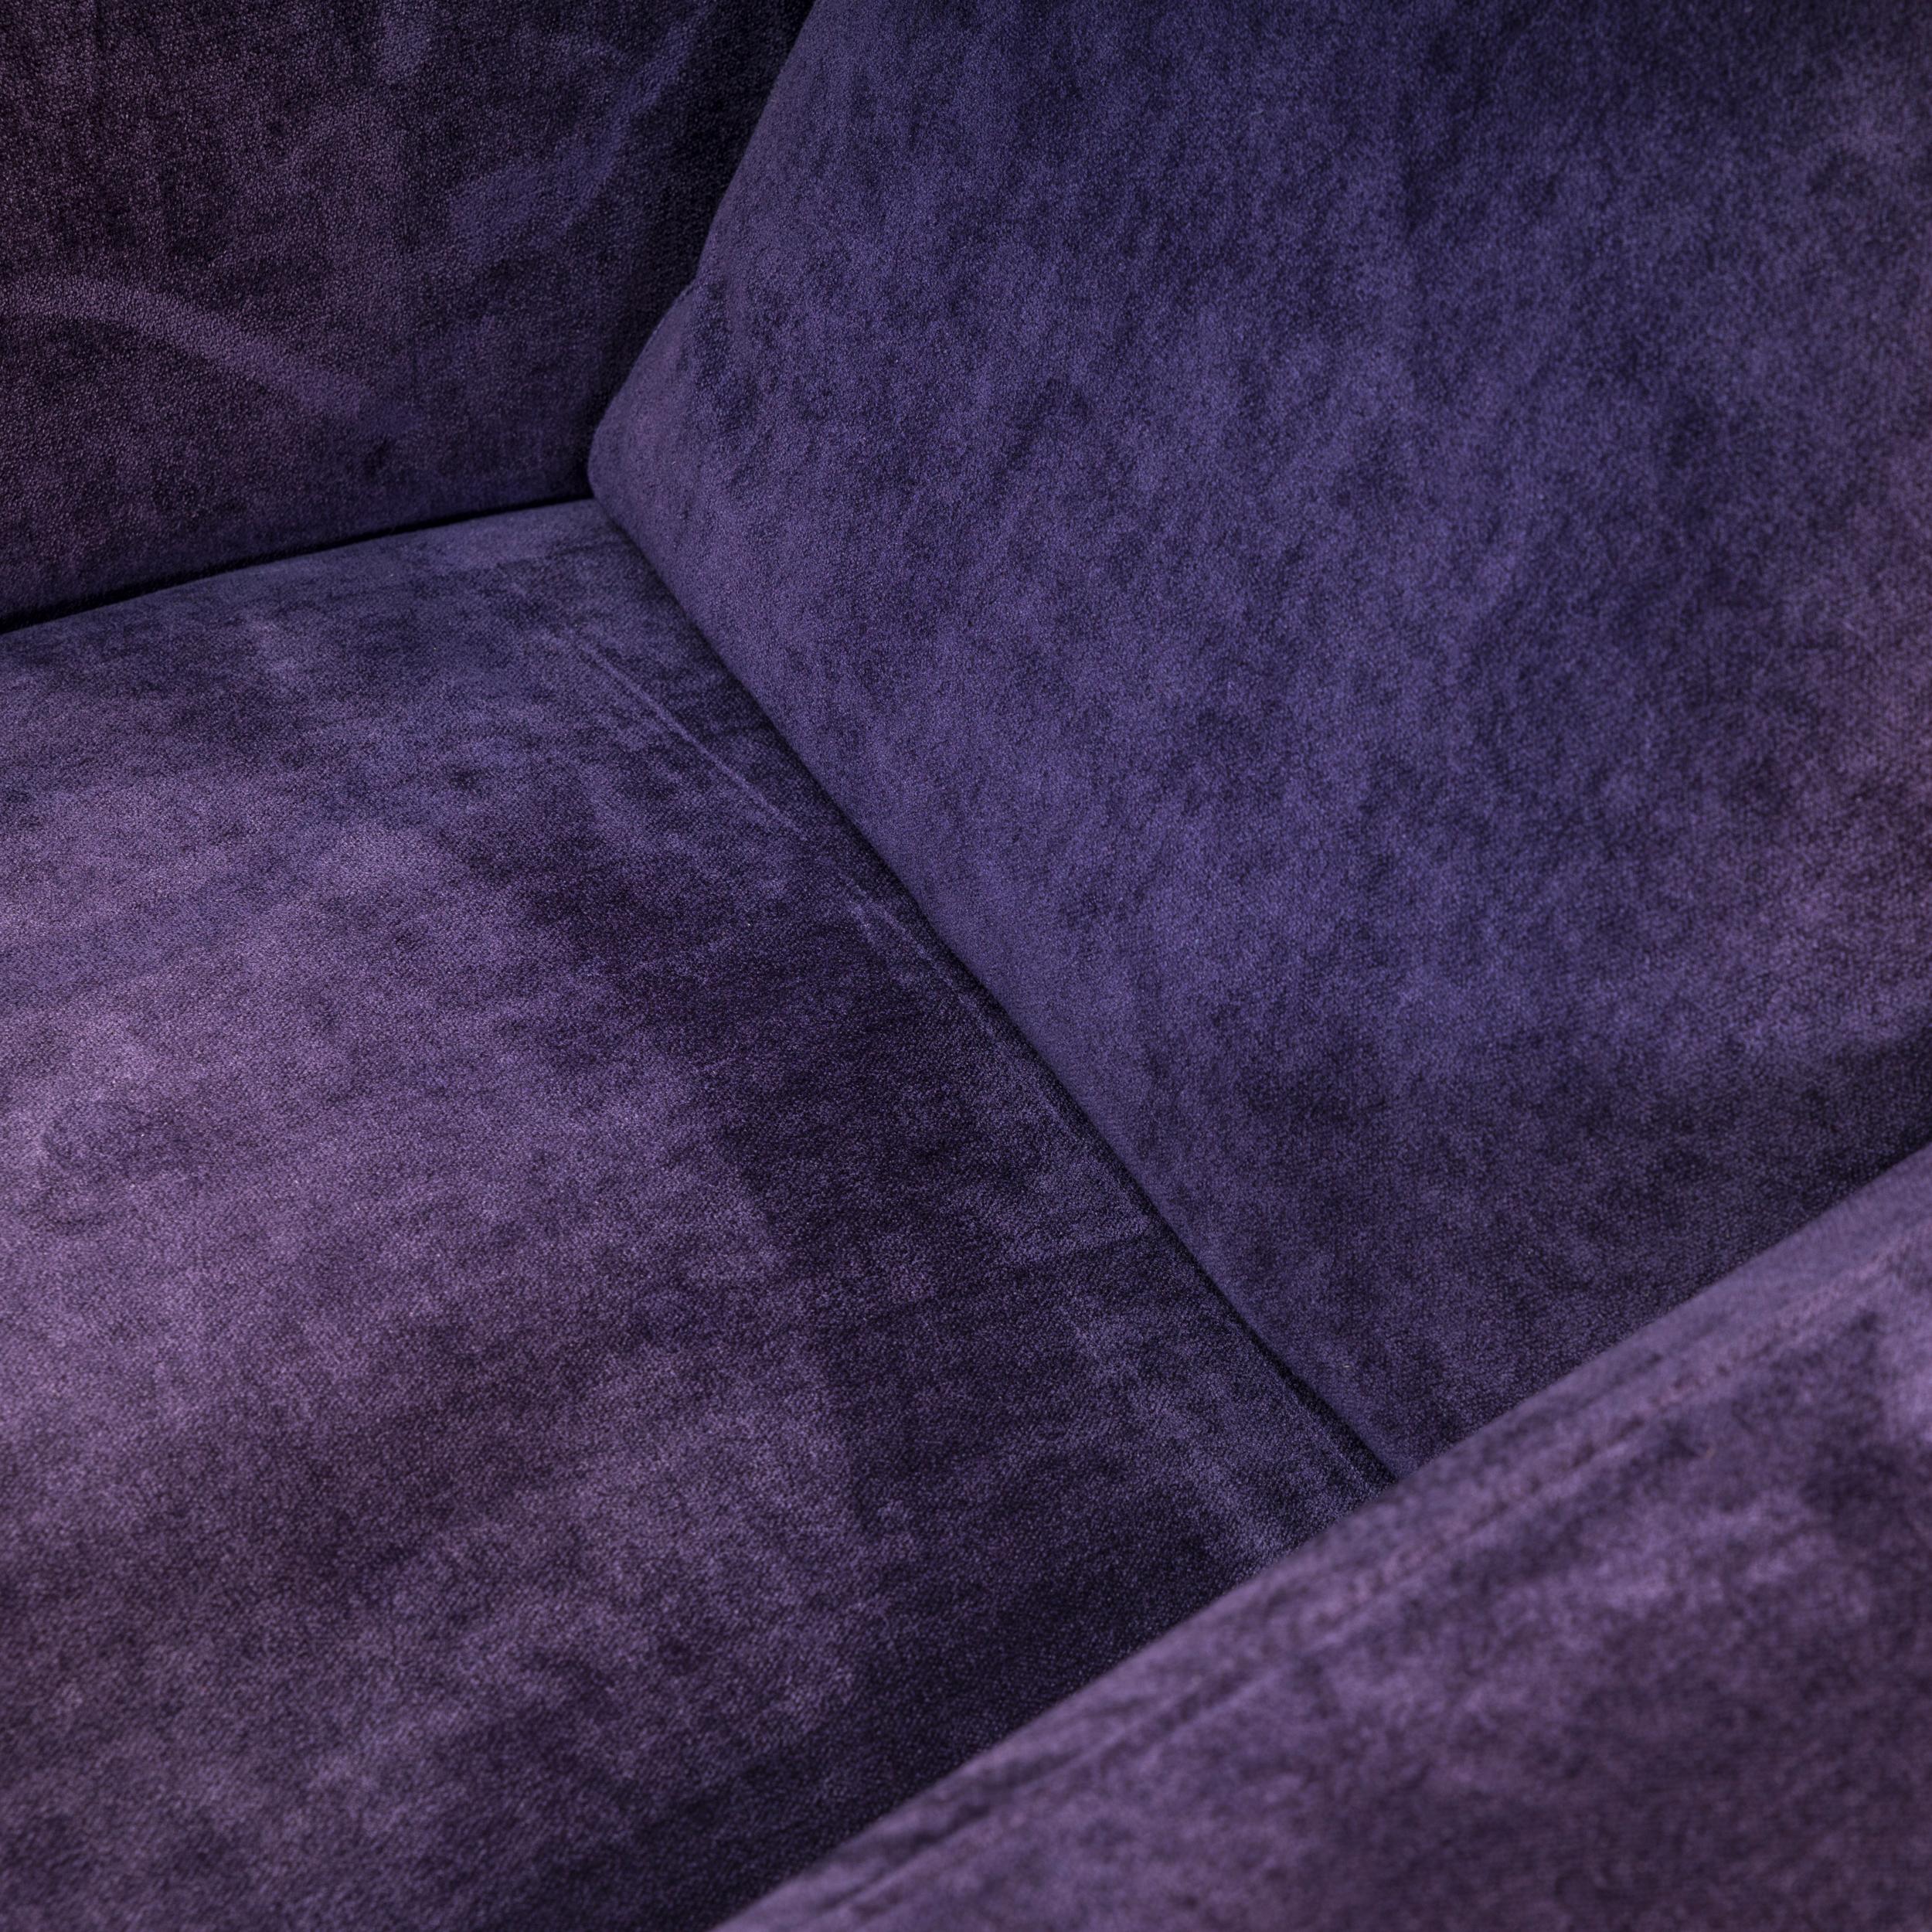 B&B Italia Antonio Citterio Dark Purple Fabric Harry Armchairs, Set of 2 For Sale 1